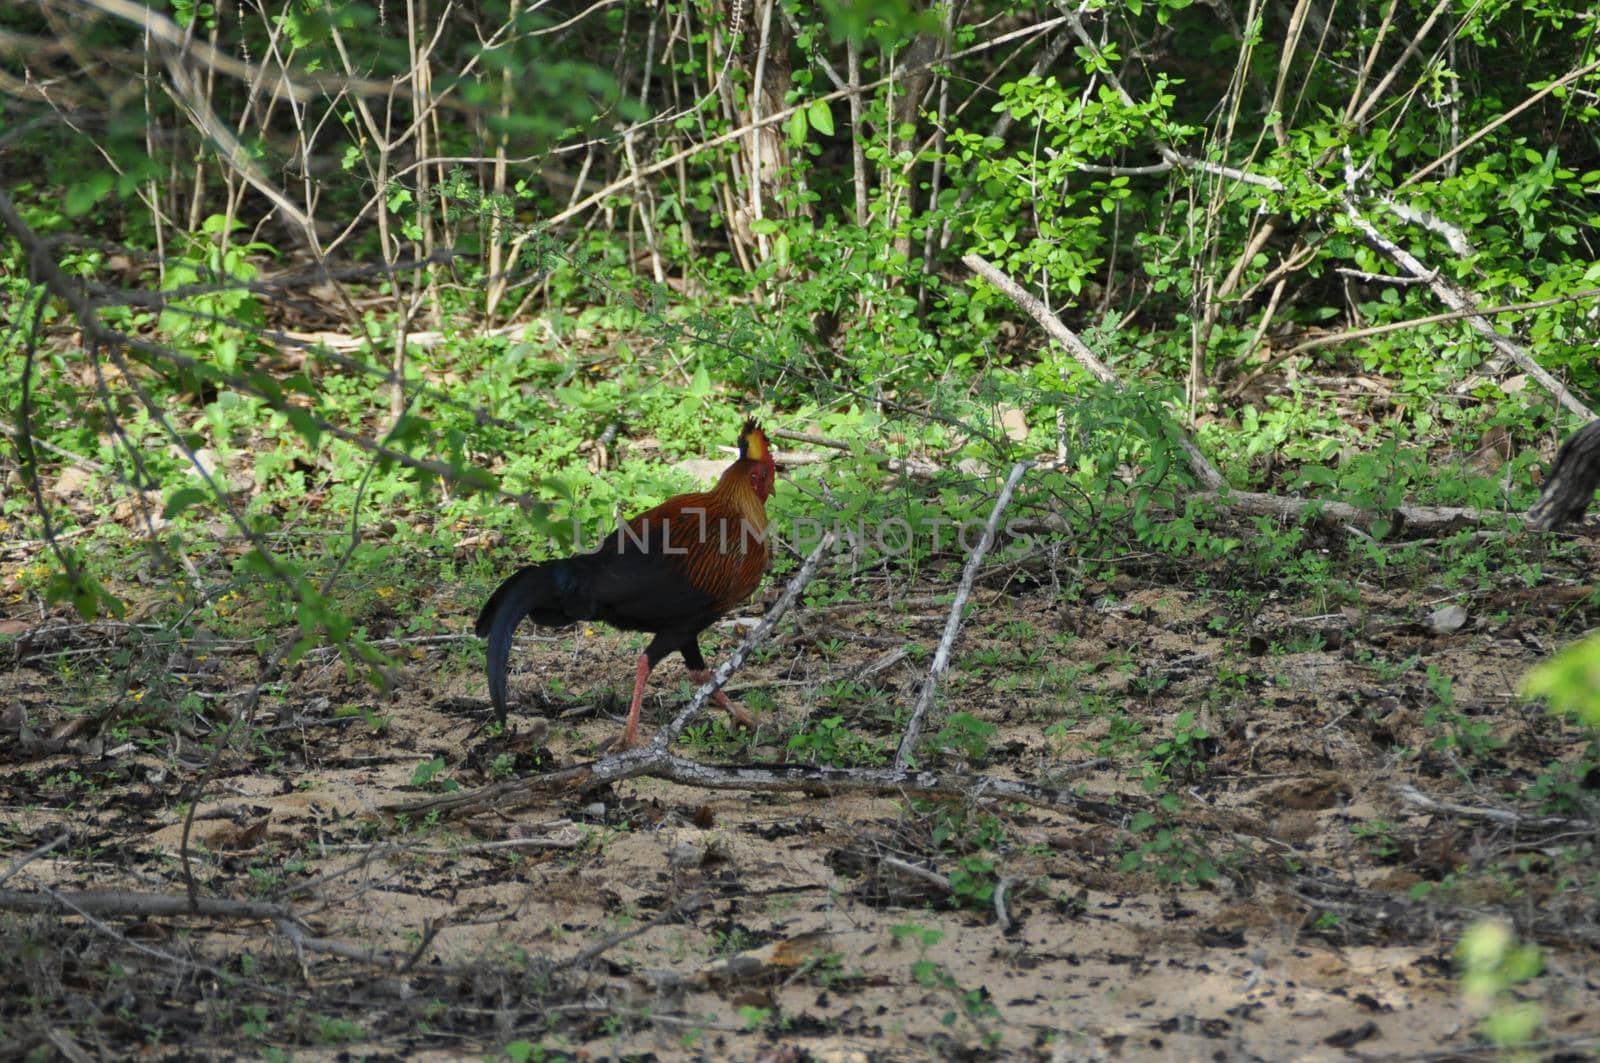 A Sri Lankan junglefowl in Yala National Park, Sri Lanka by Capos